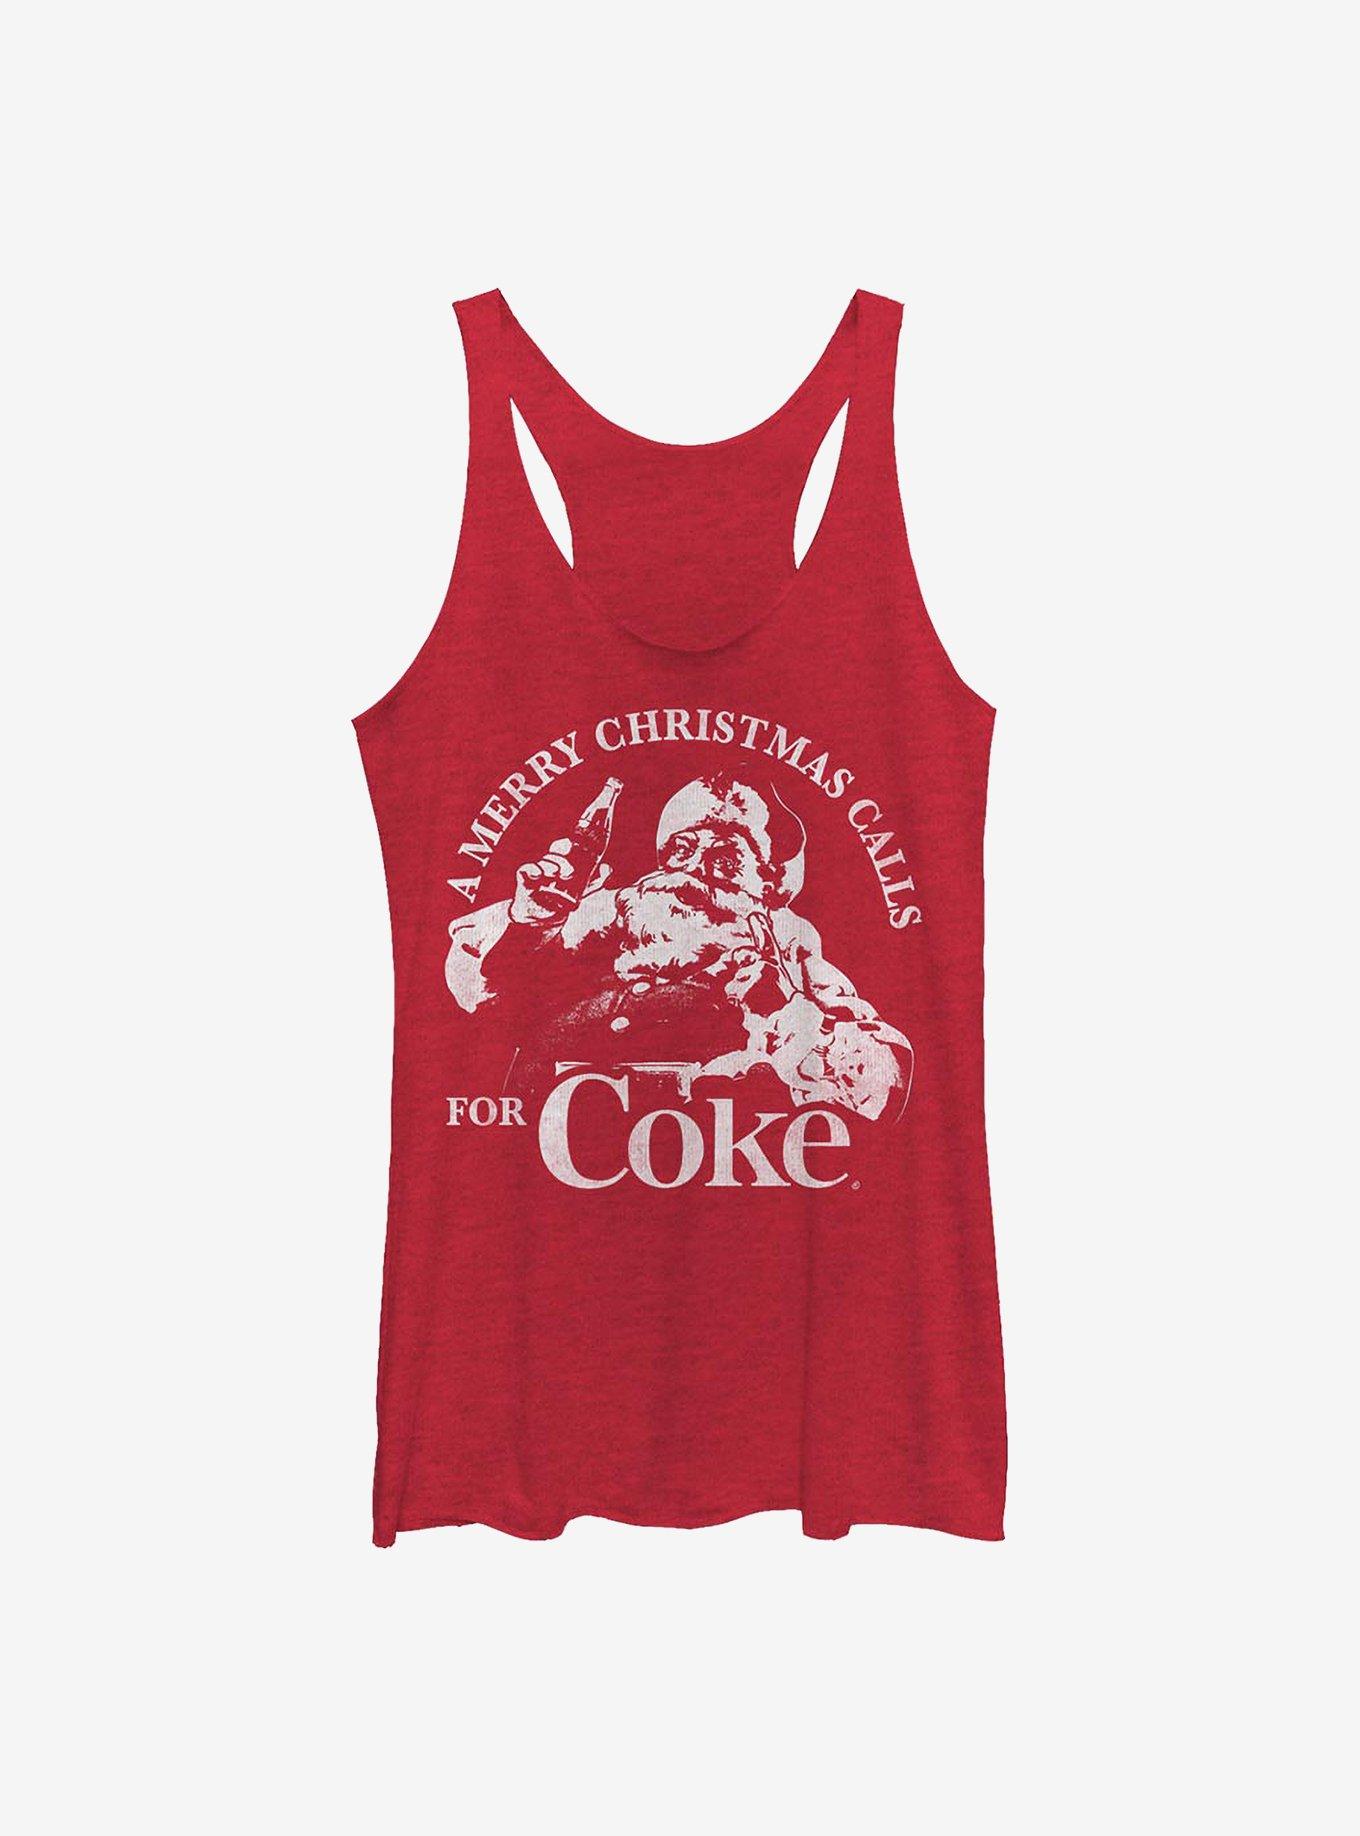 Coke A Merry Christmas Calls For Coke Girls Tank, RED HTR, hi-res